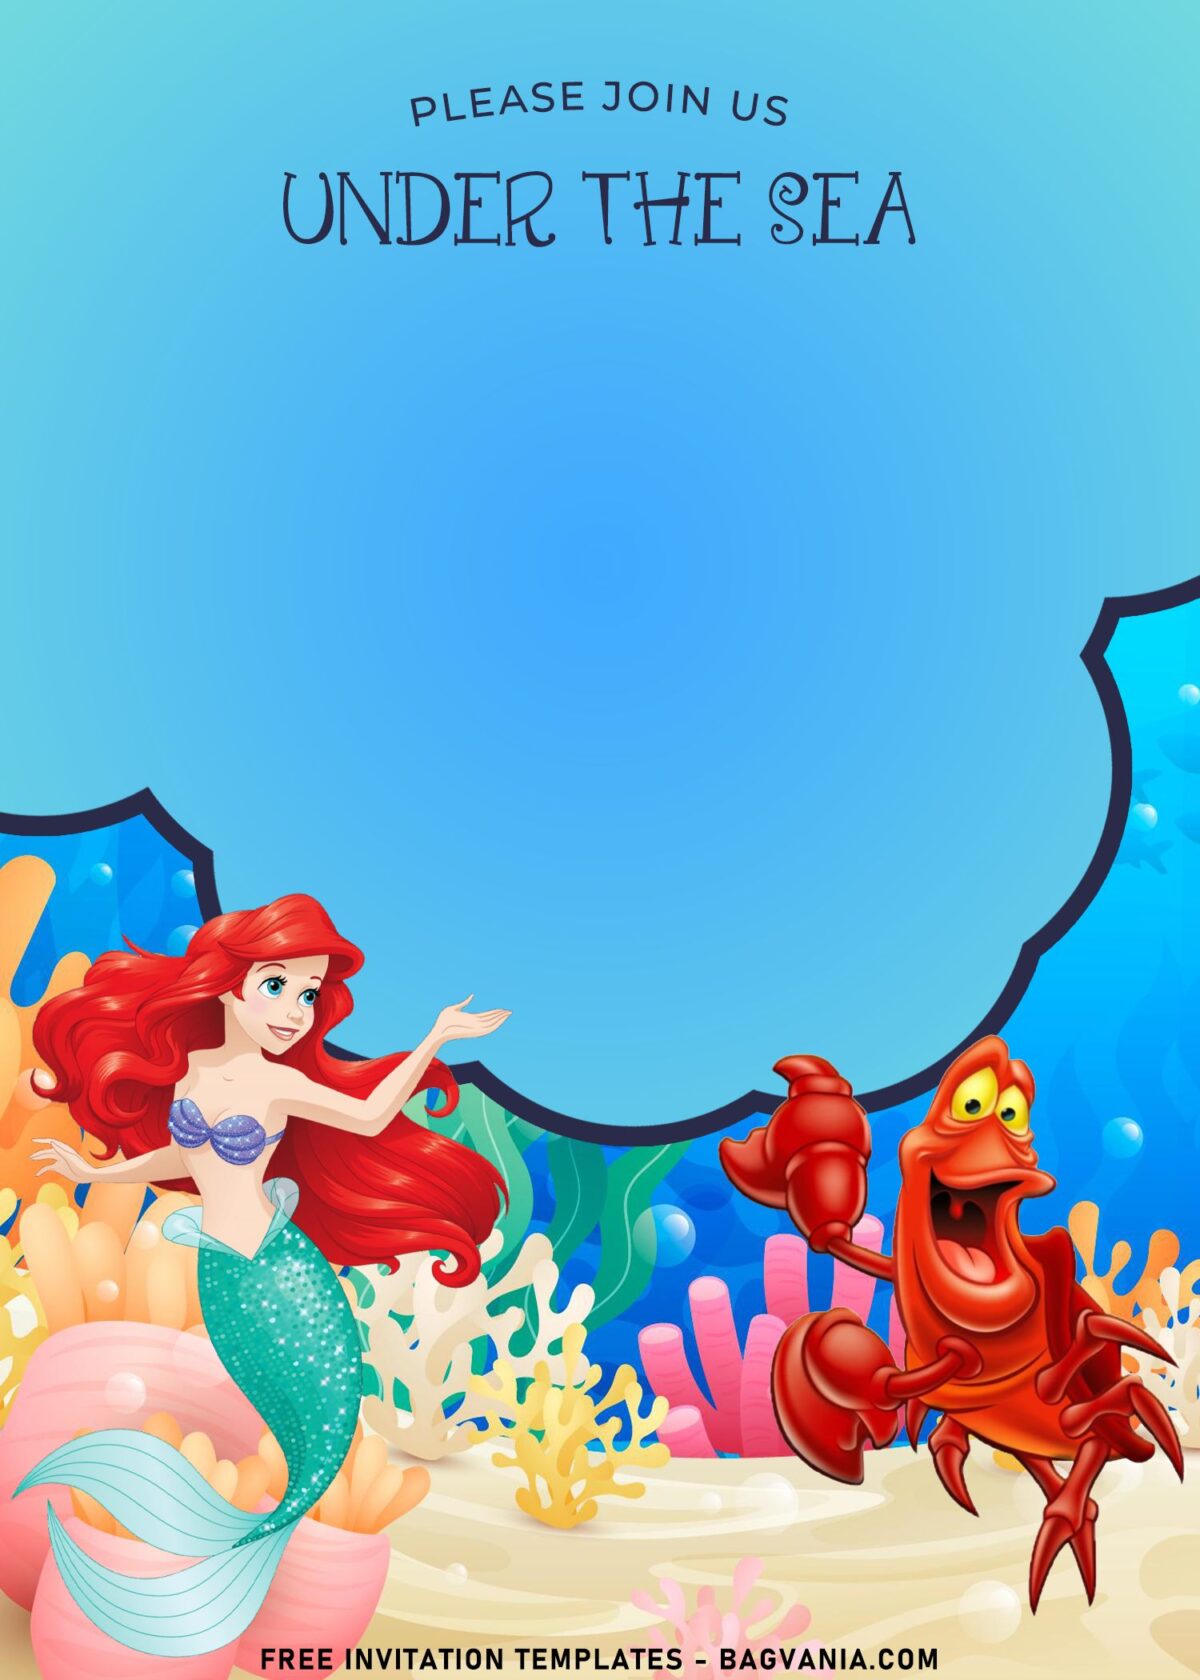 8+ Adorable Princess Ariel Invitation Templates With Flounder And Sebastian with portrait design